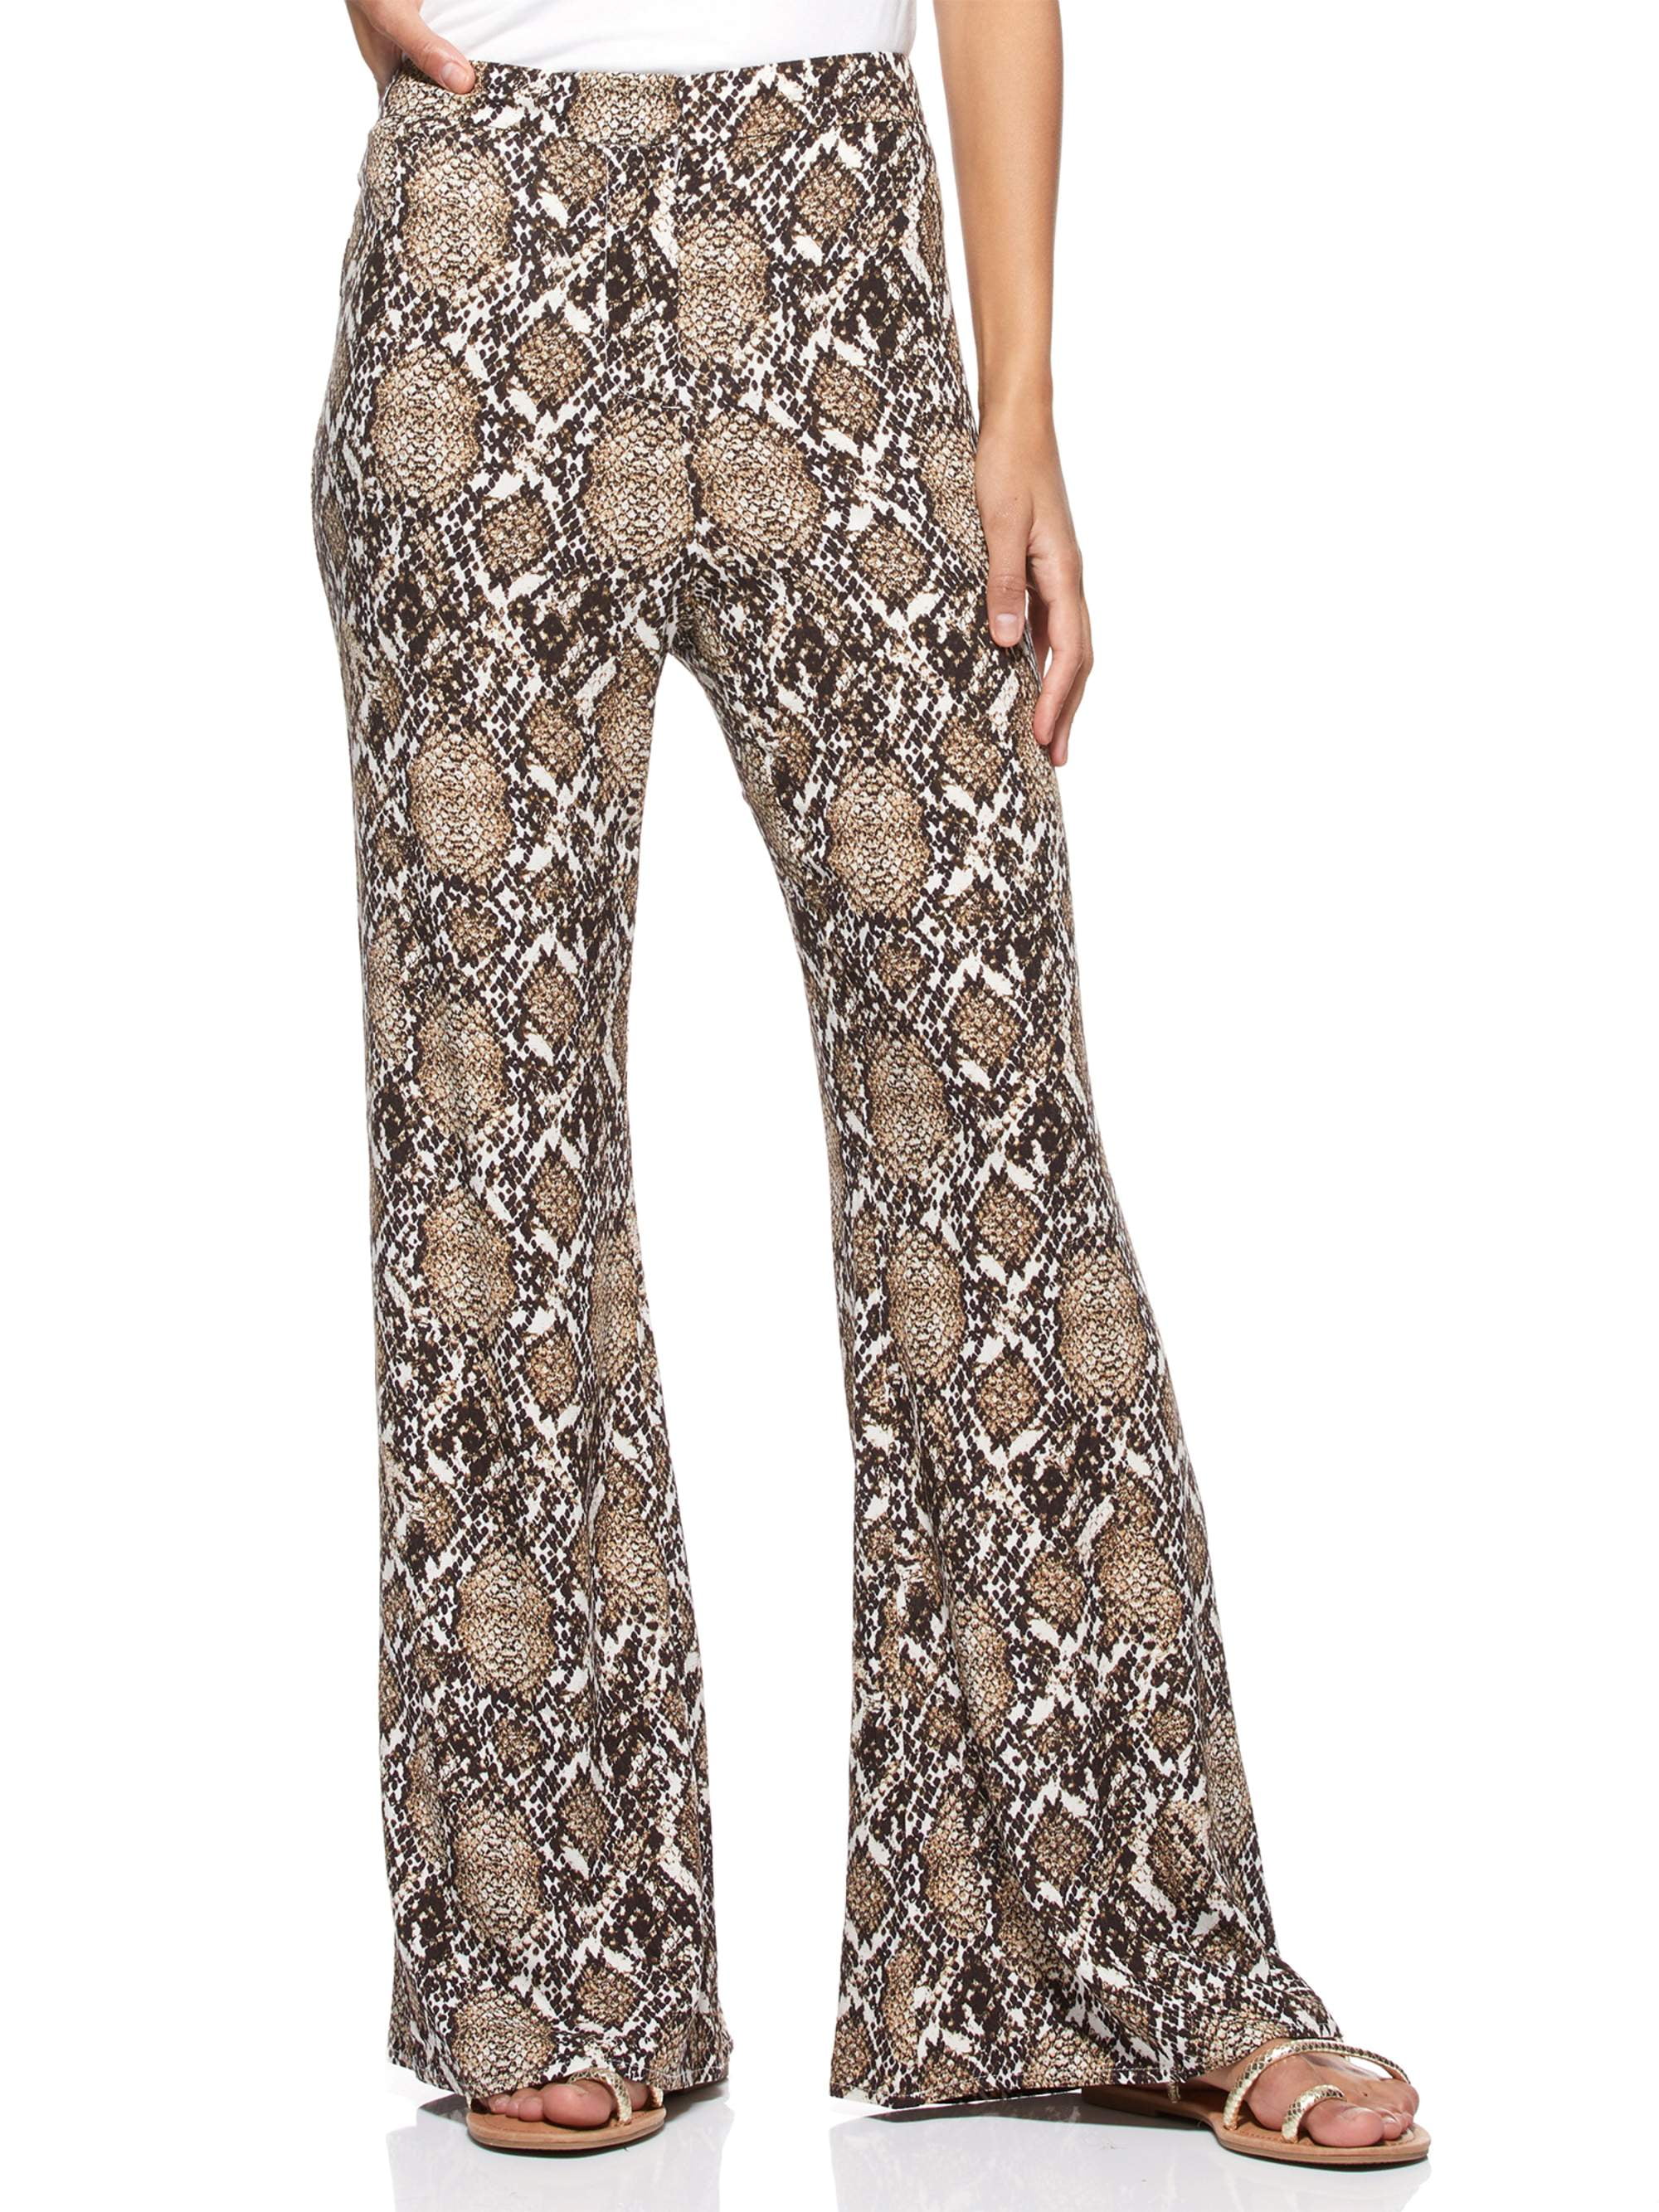 Scoop Women’s Snakeskin Print Flare Pants - Walmart.com